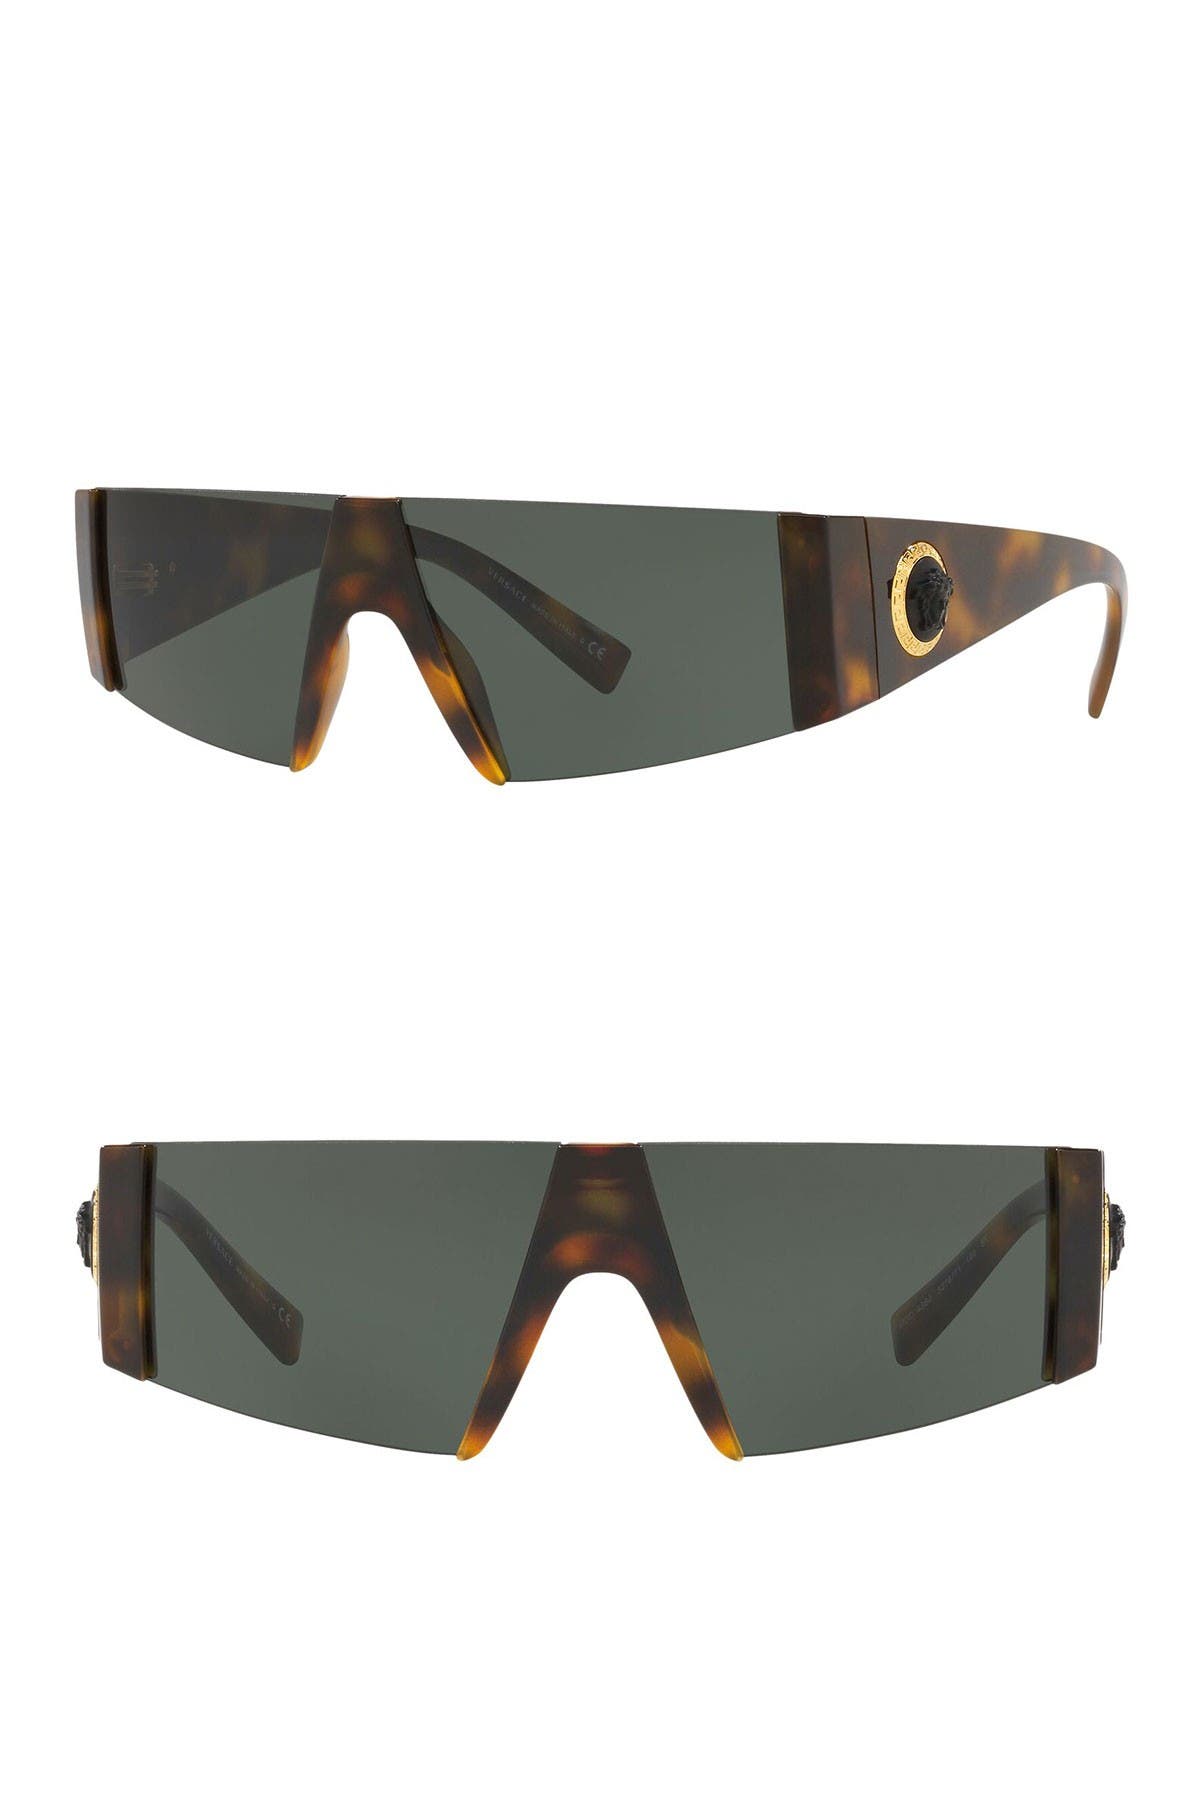 versace gold shield sunglasses